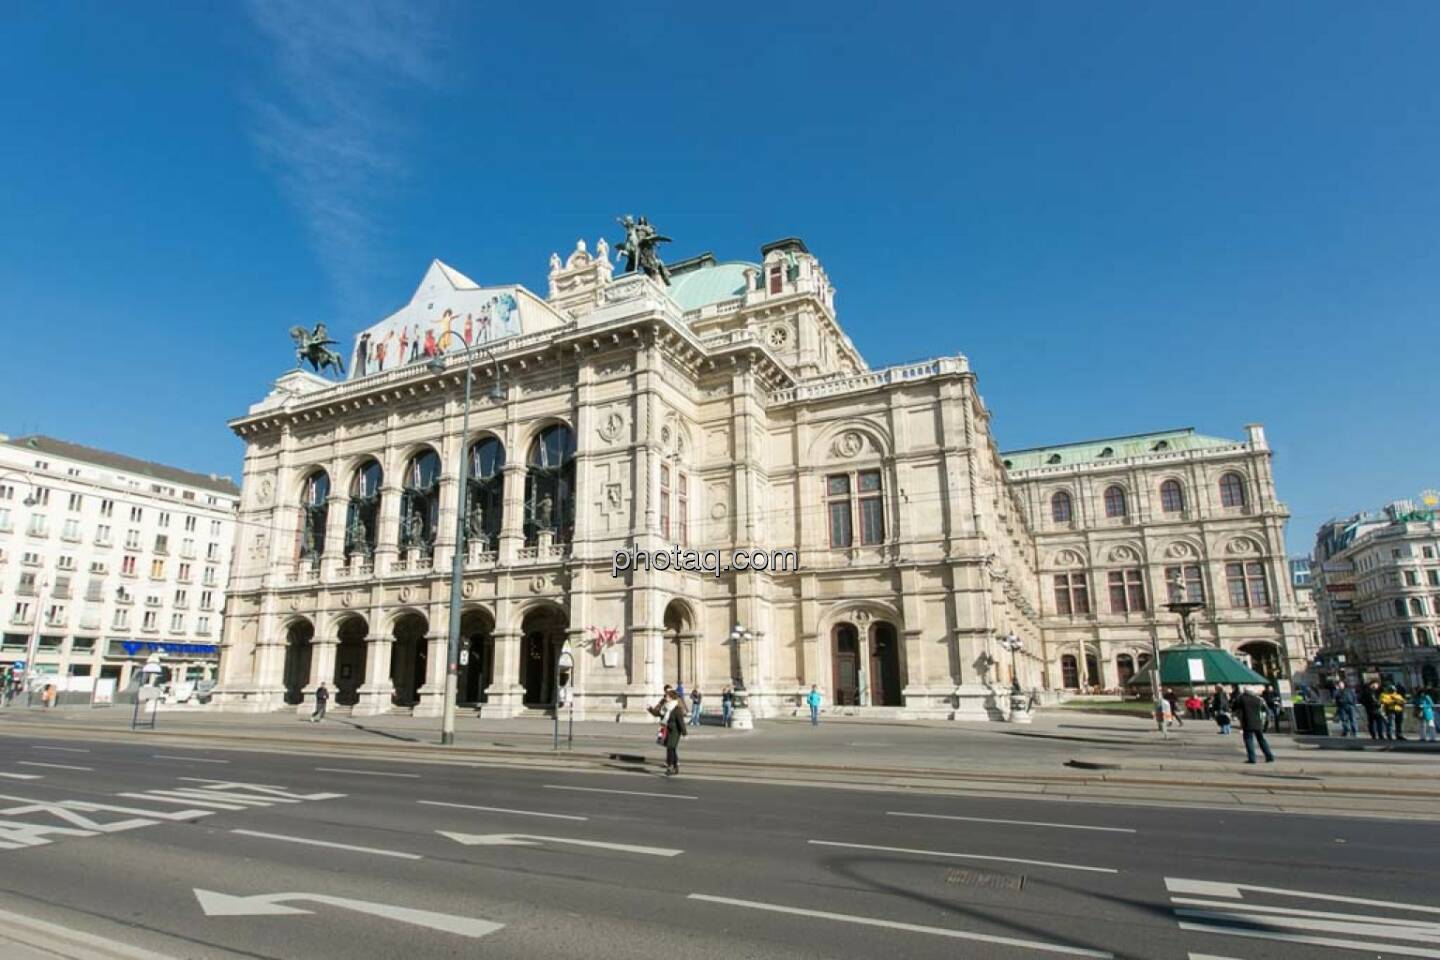 Wien, Wiener Staatsoper